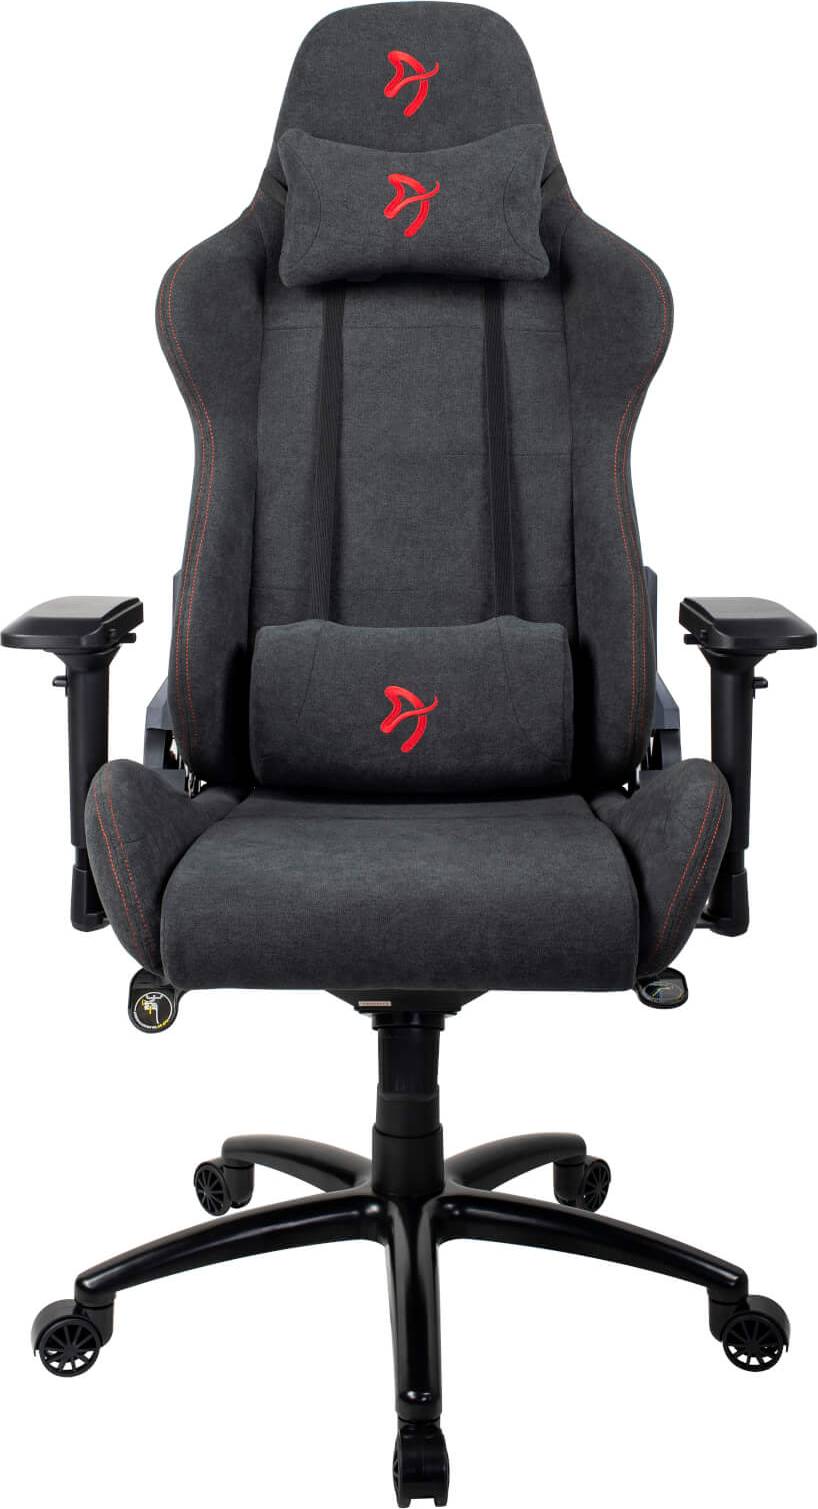  Bild på Arozzi Verona Signature Soft Fabric Gaming Chair - Black/Red gamingstol